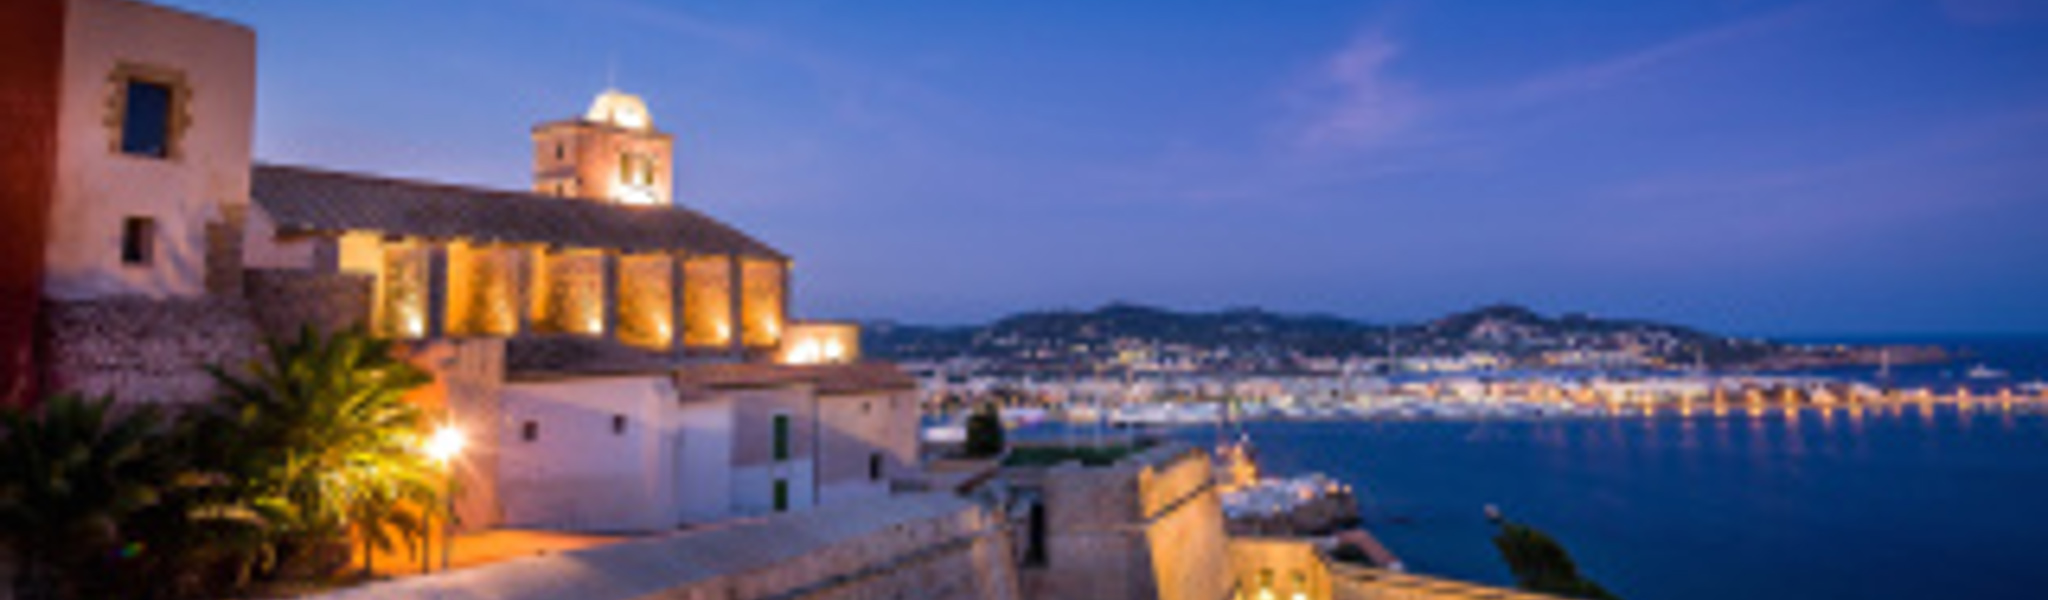 10 Reasons why we love Ibiza 